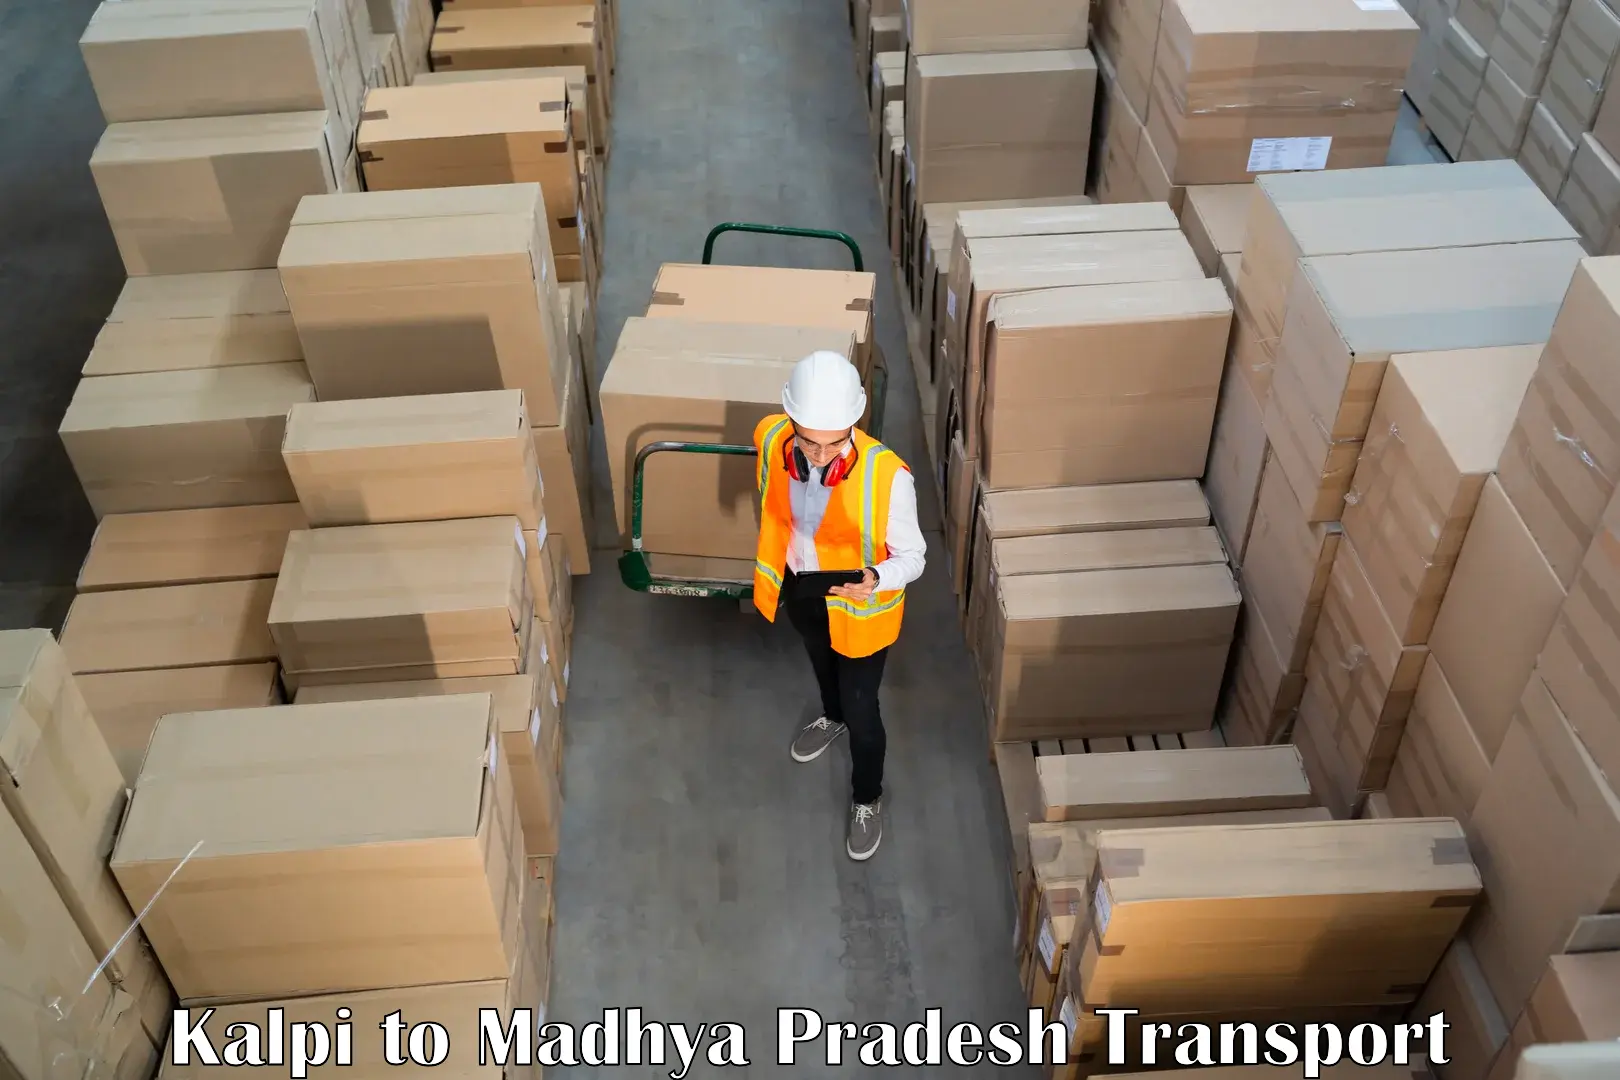 Truck transport companies in India Kalpi to Beohari